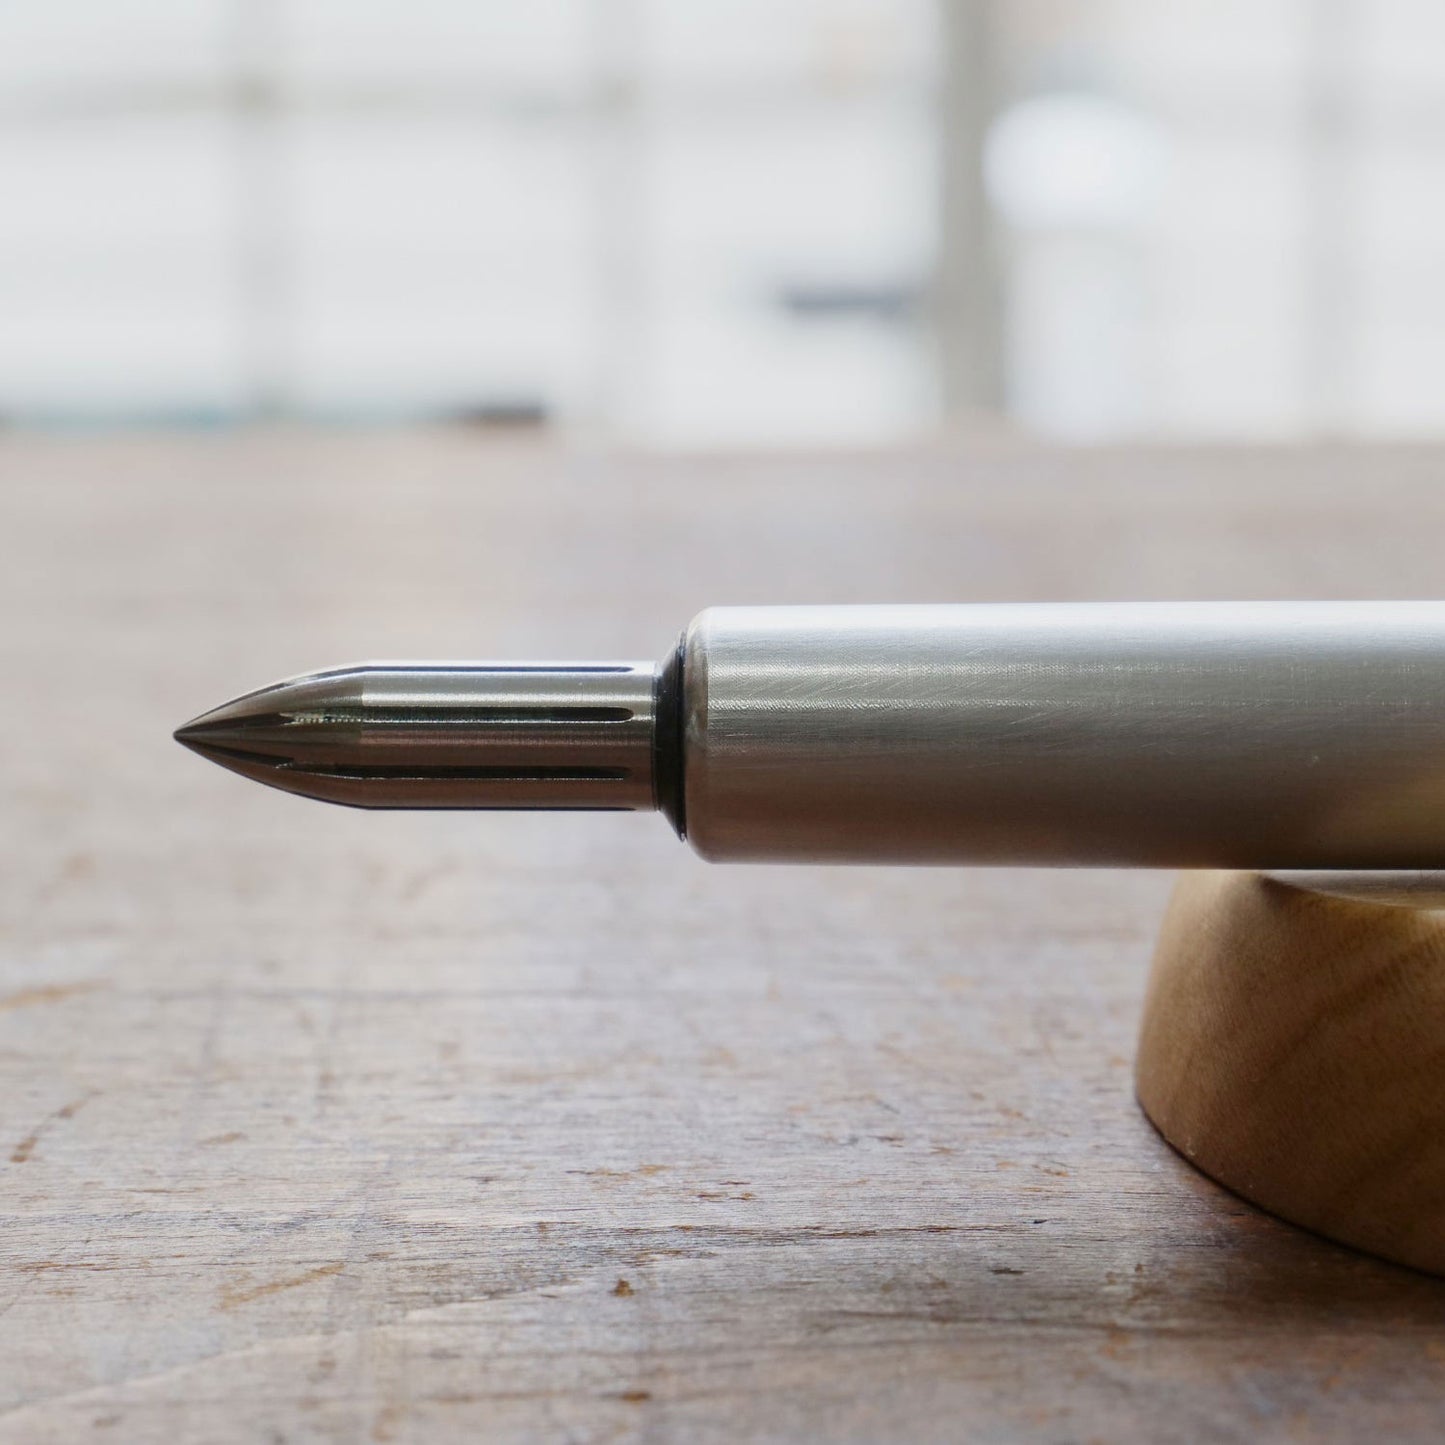 Dip Pen Nib/ Stainless Steel (Kakimori)